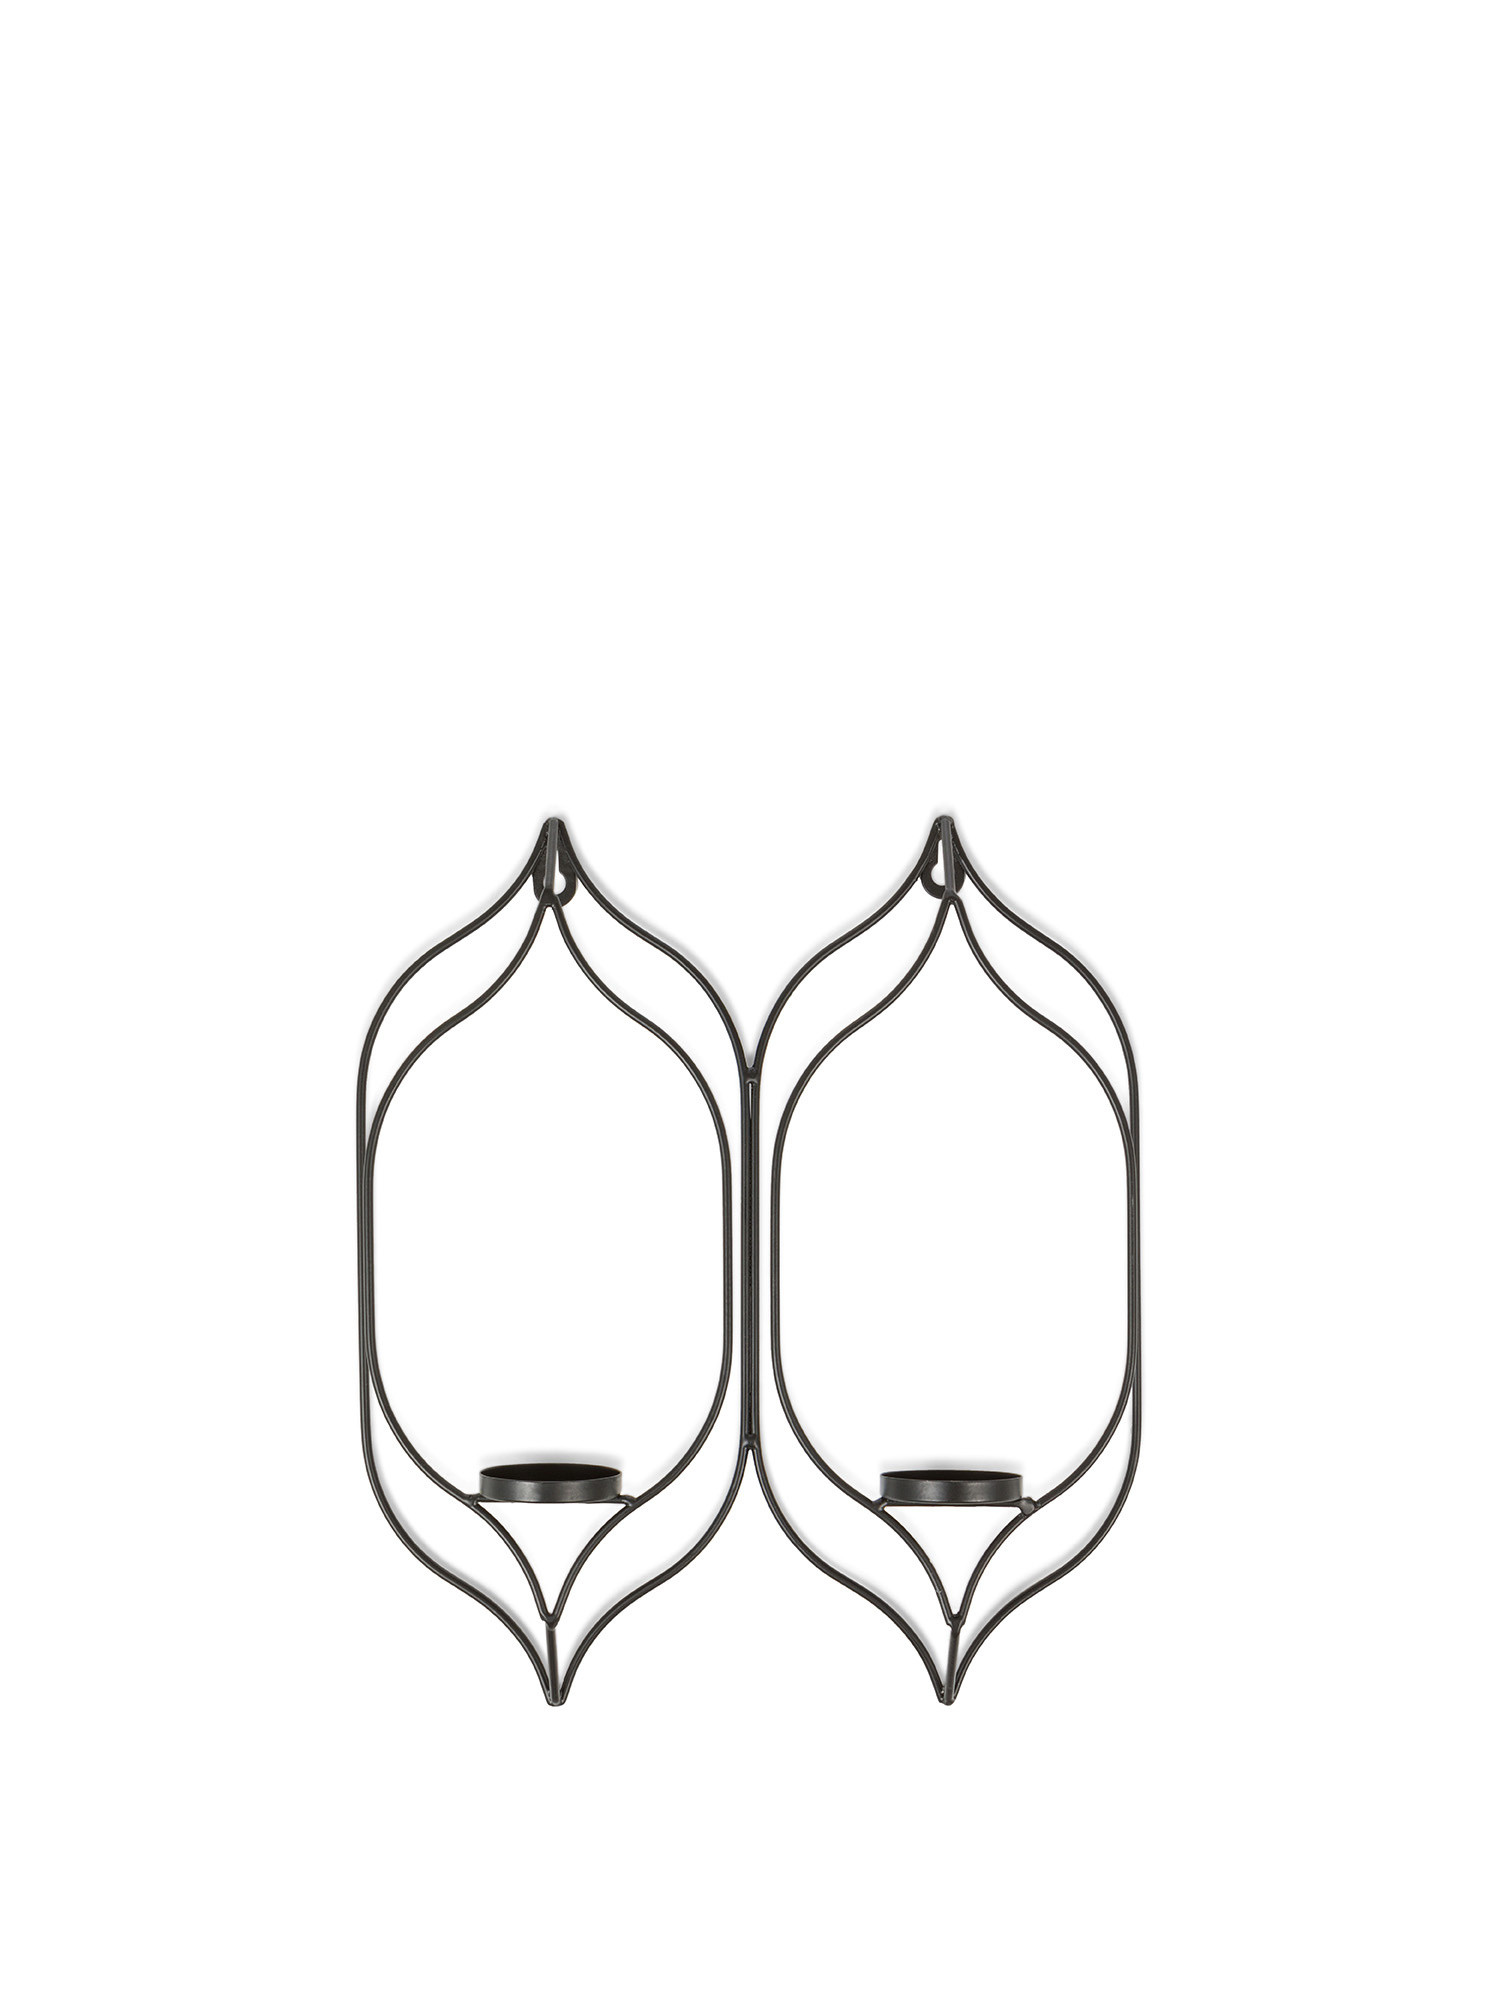 Portacandele da muro in ferro con votivi in vetro, Nero, large image number 0